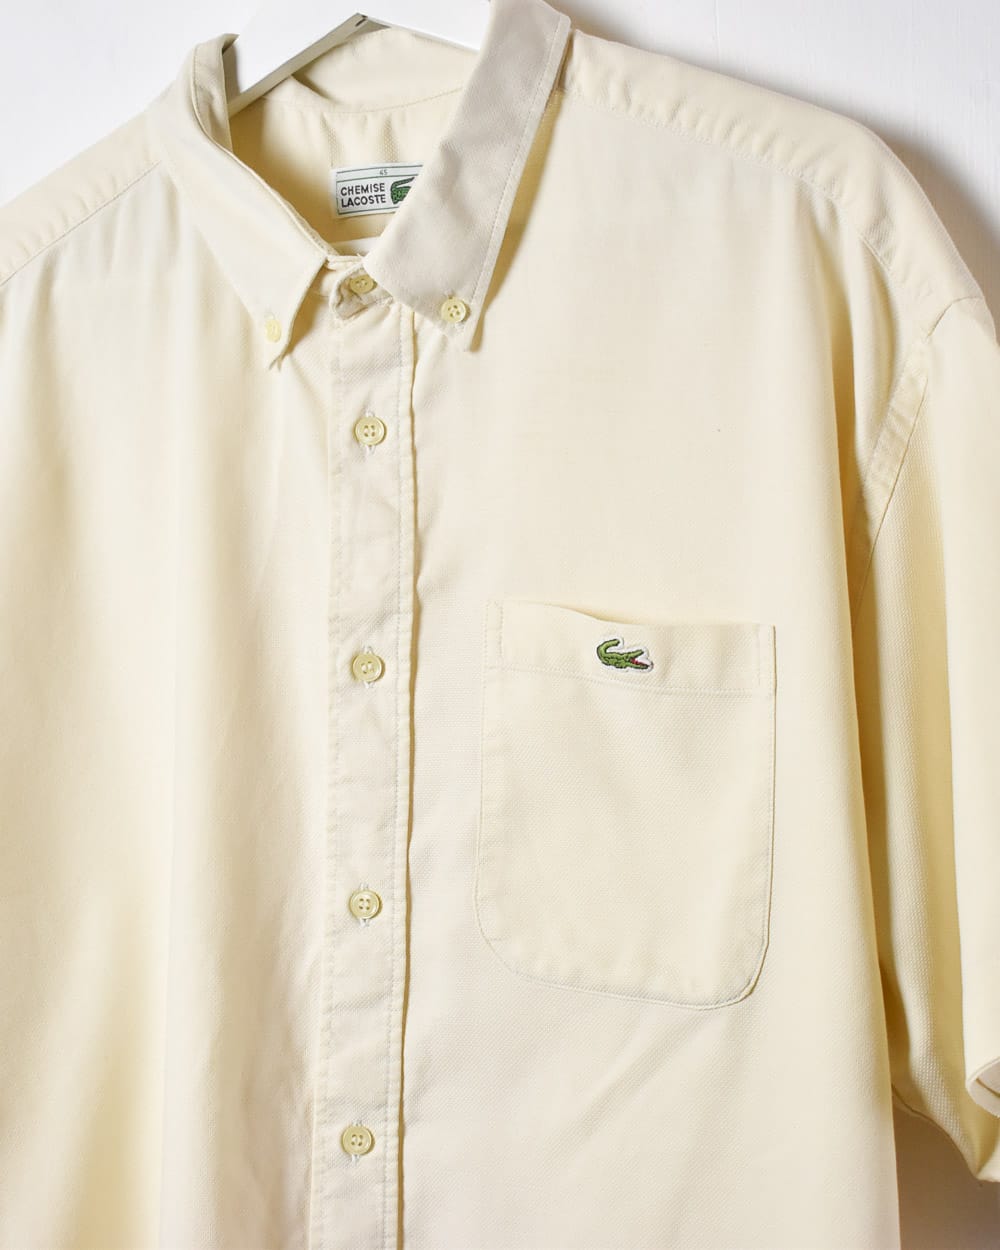 Neutral Chemise Lacoste Short Sleeved Shirt - X-Large